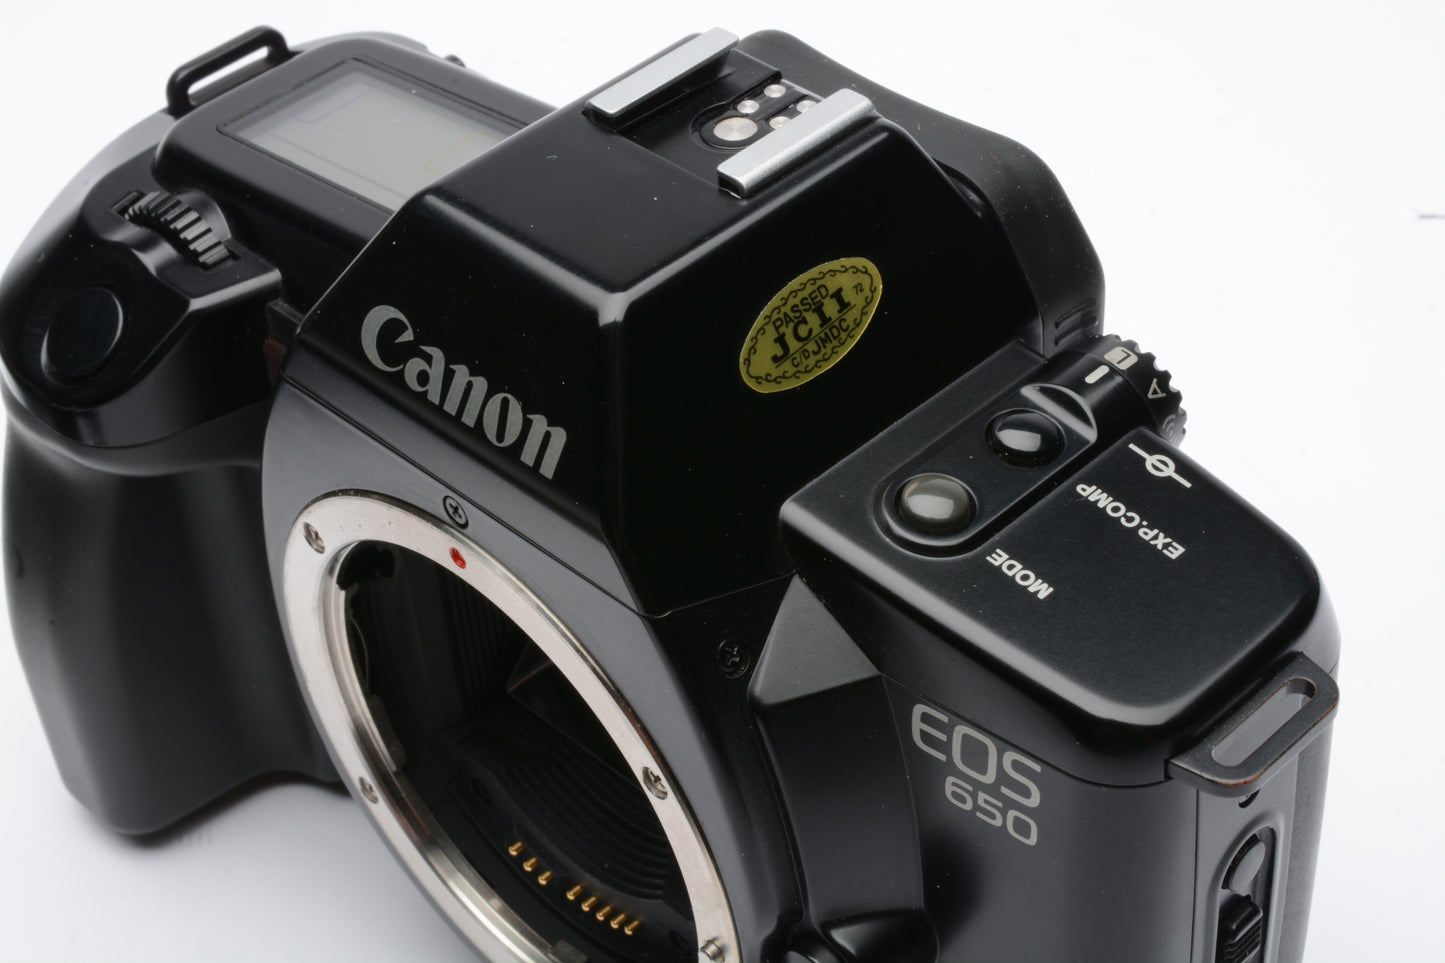 Canon EOS 650 35mm SLR Body + 300EZ flash, strap, manual, tested